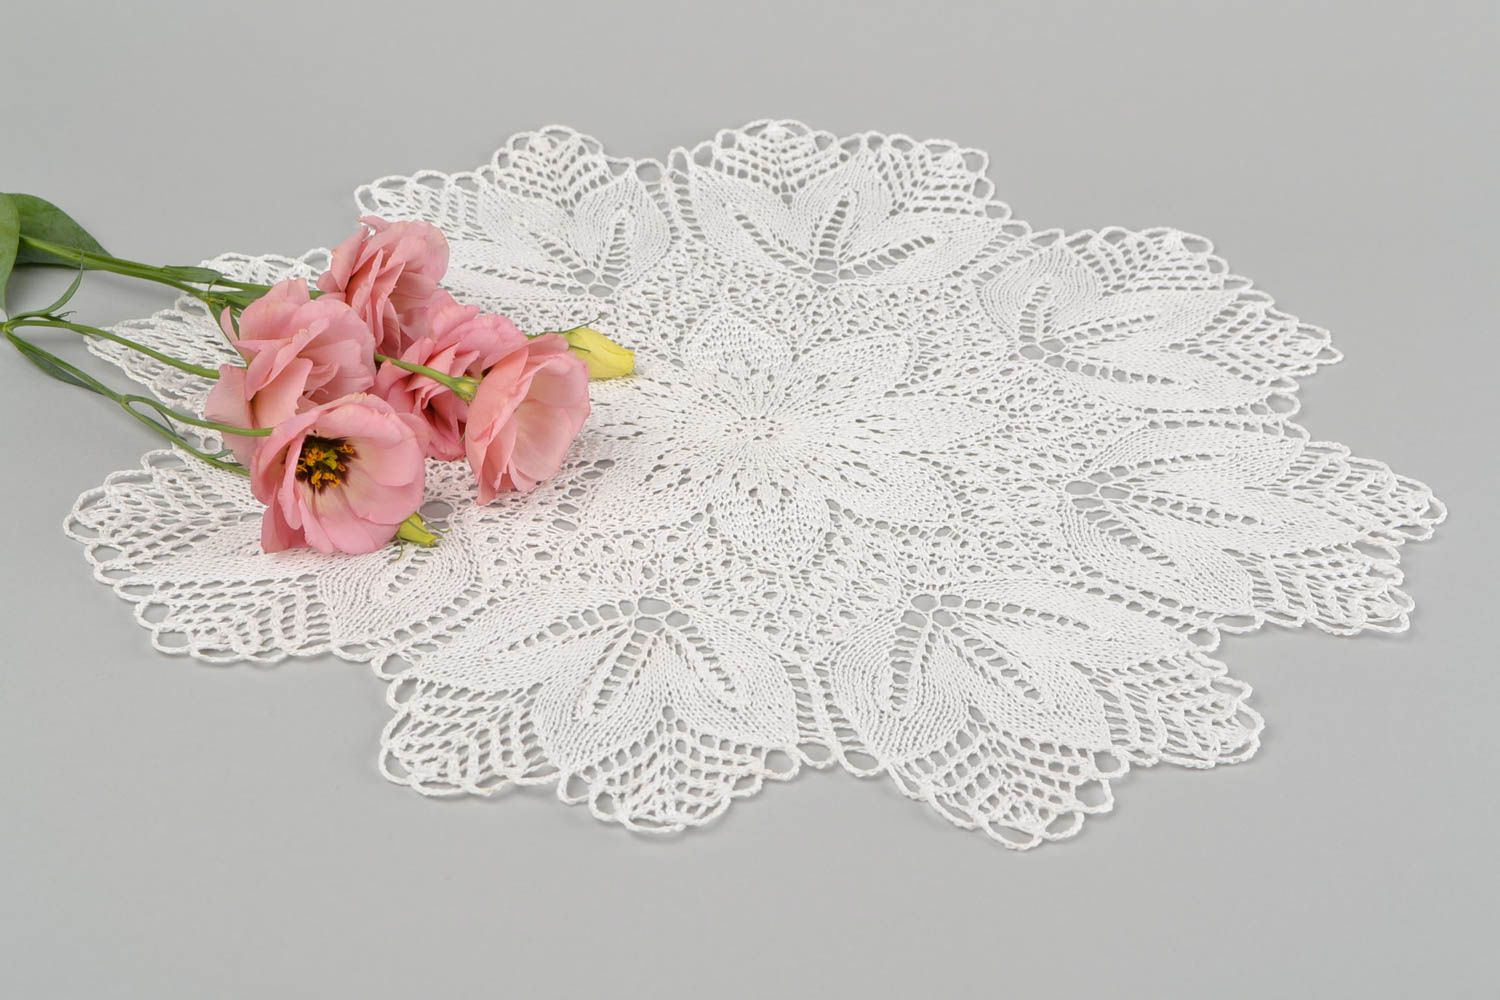 Handmade fabric napkin knitted napkin for table home textiles interior ideas photo 1